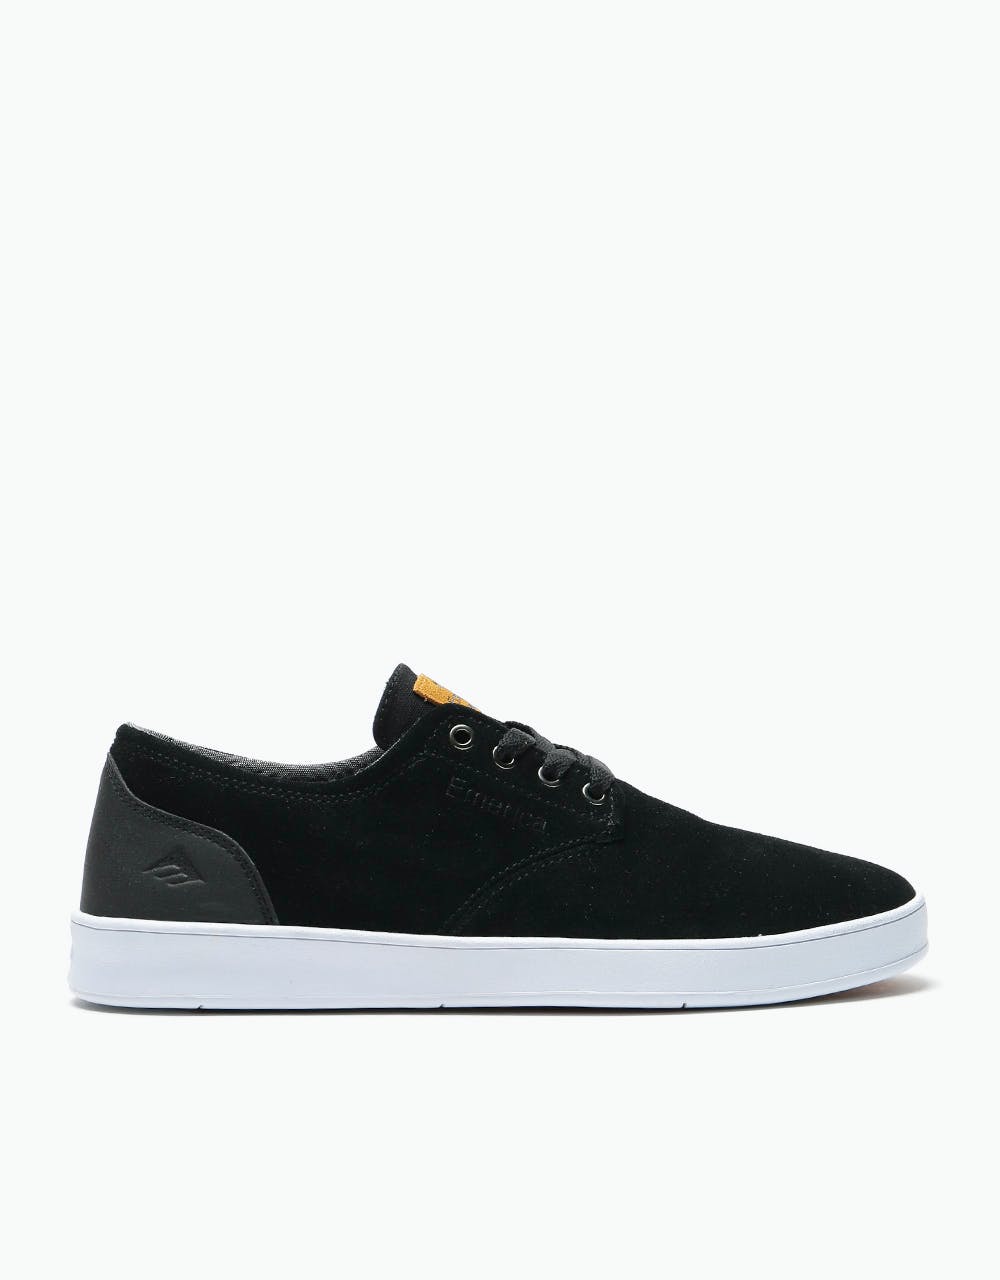 Emerica The Romero Laced Skate Shoes - Black/Black/White